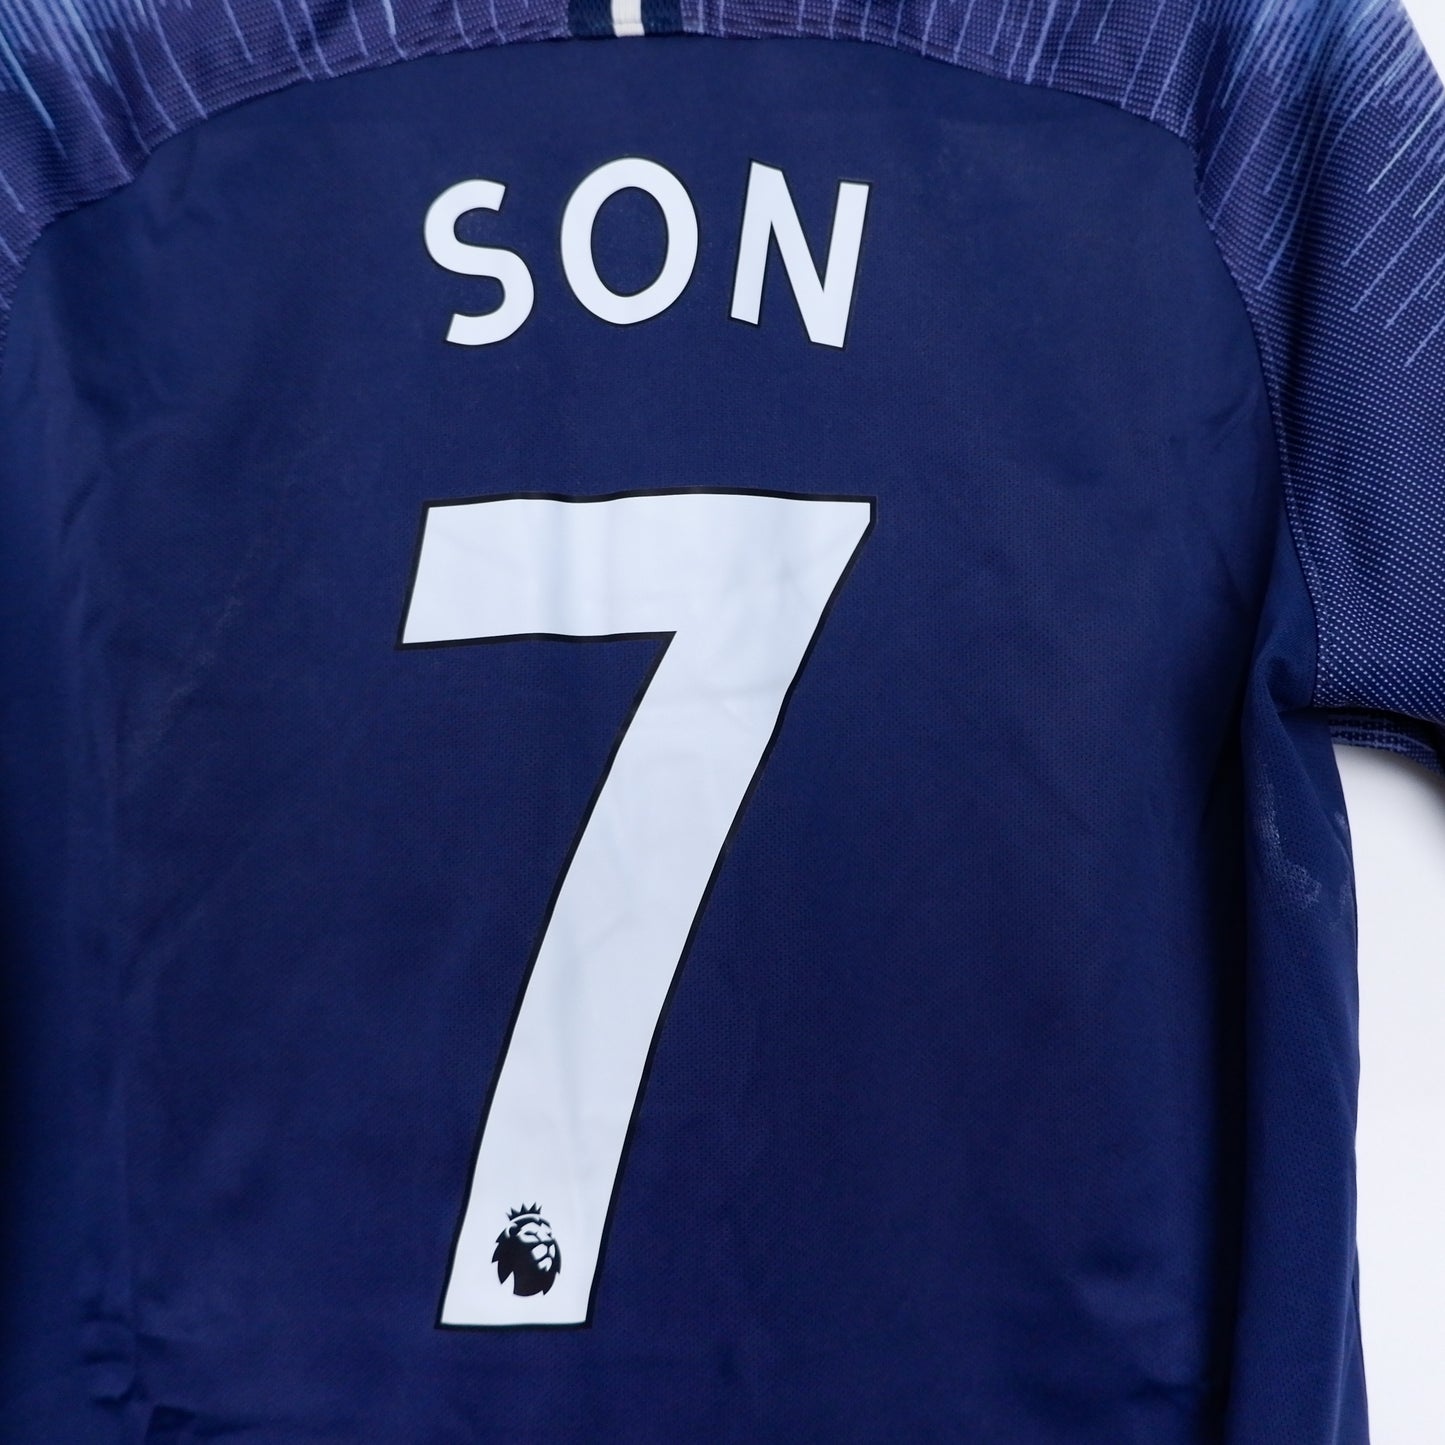 Authentic Tottenham Hotspur 2018/19 Away - Son Heung-min #7 Size L